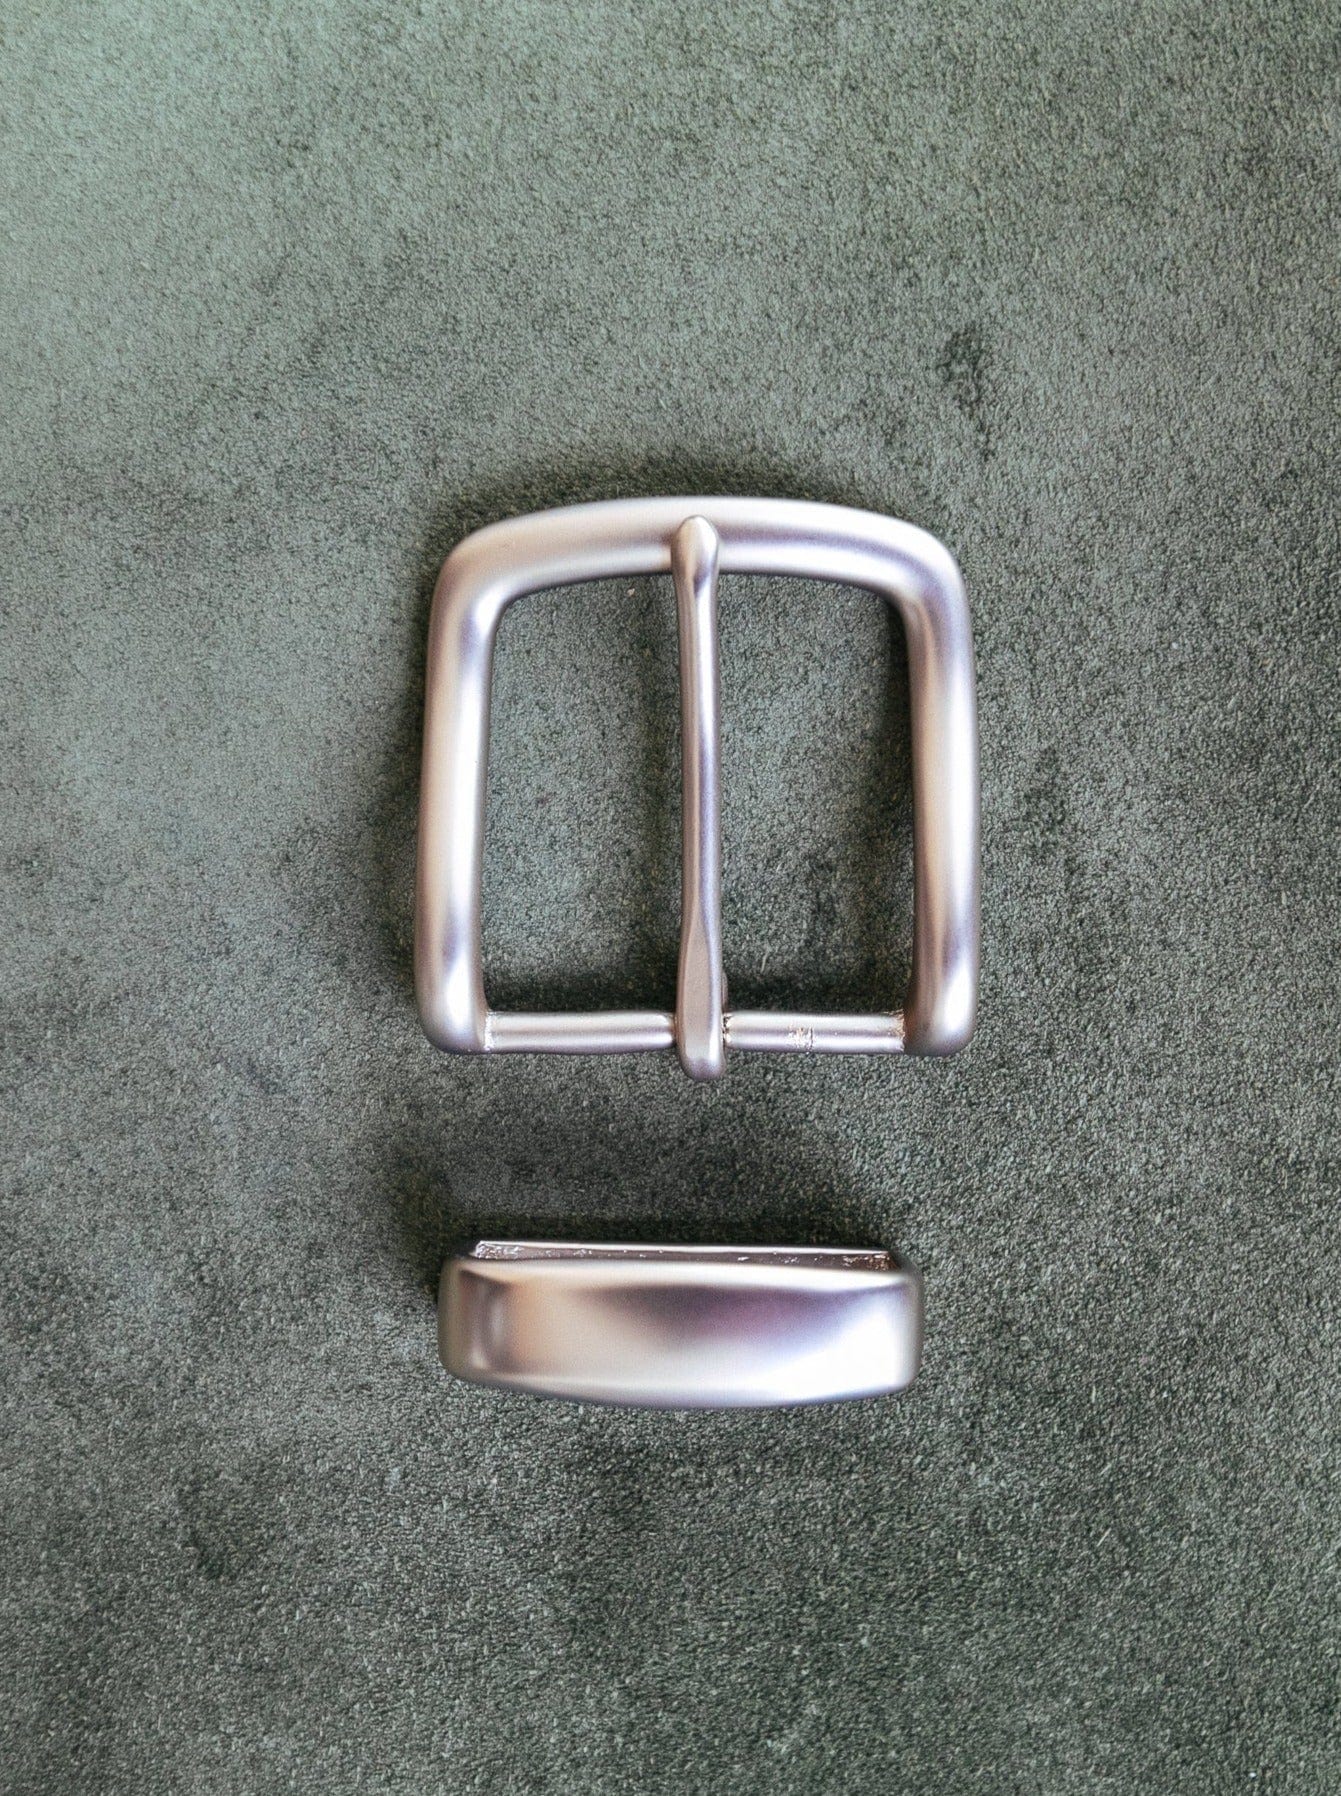 Solid Brass Belt Buckle Set - 38mm - Silver